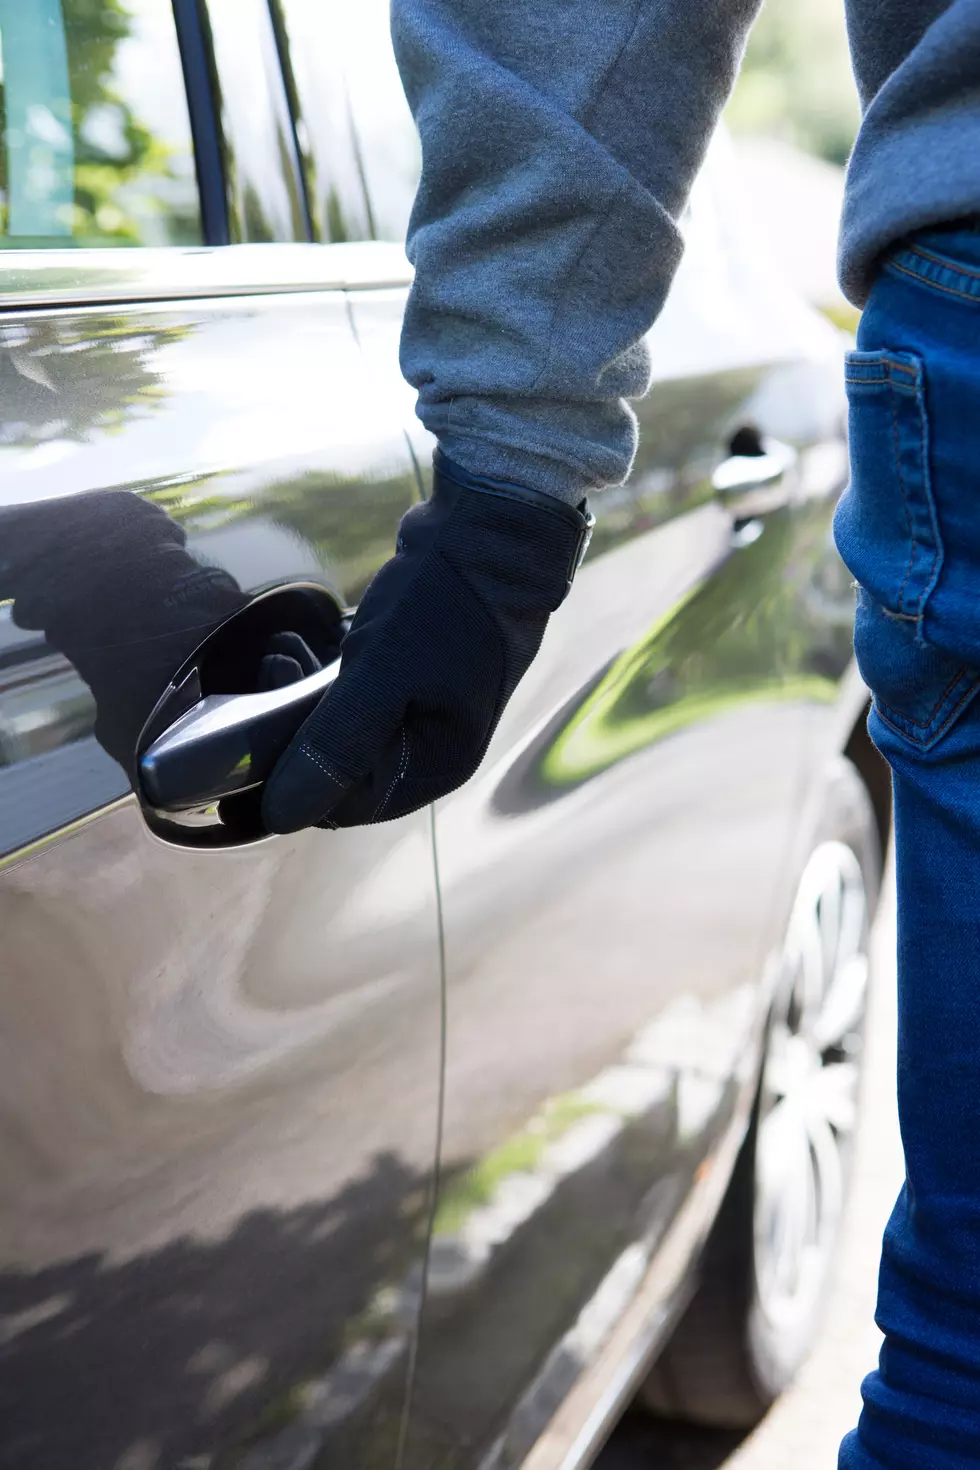 Hudson Valley Police: ‘LOCK YOUR CAR DOORS’